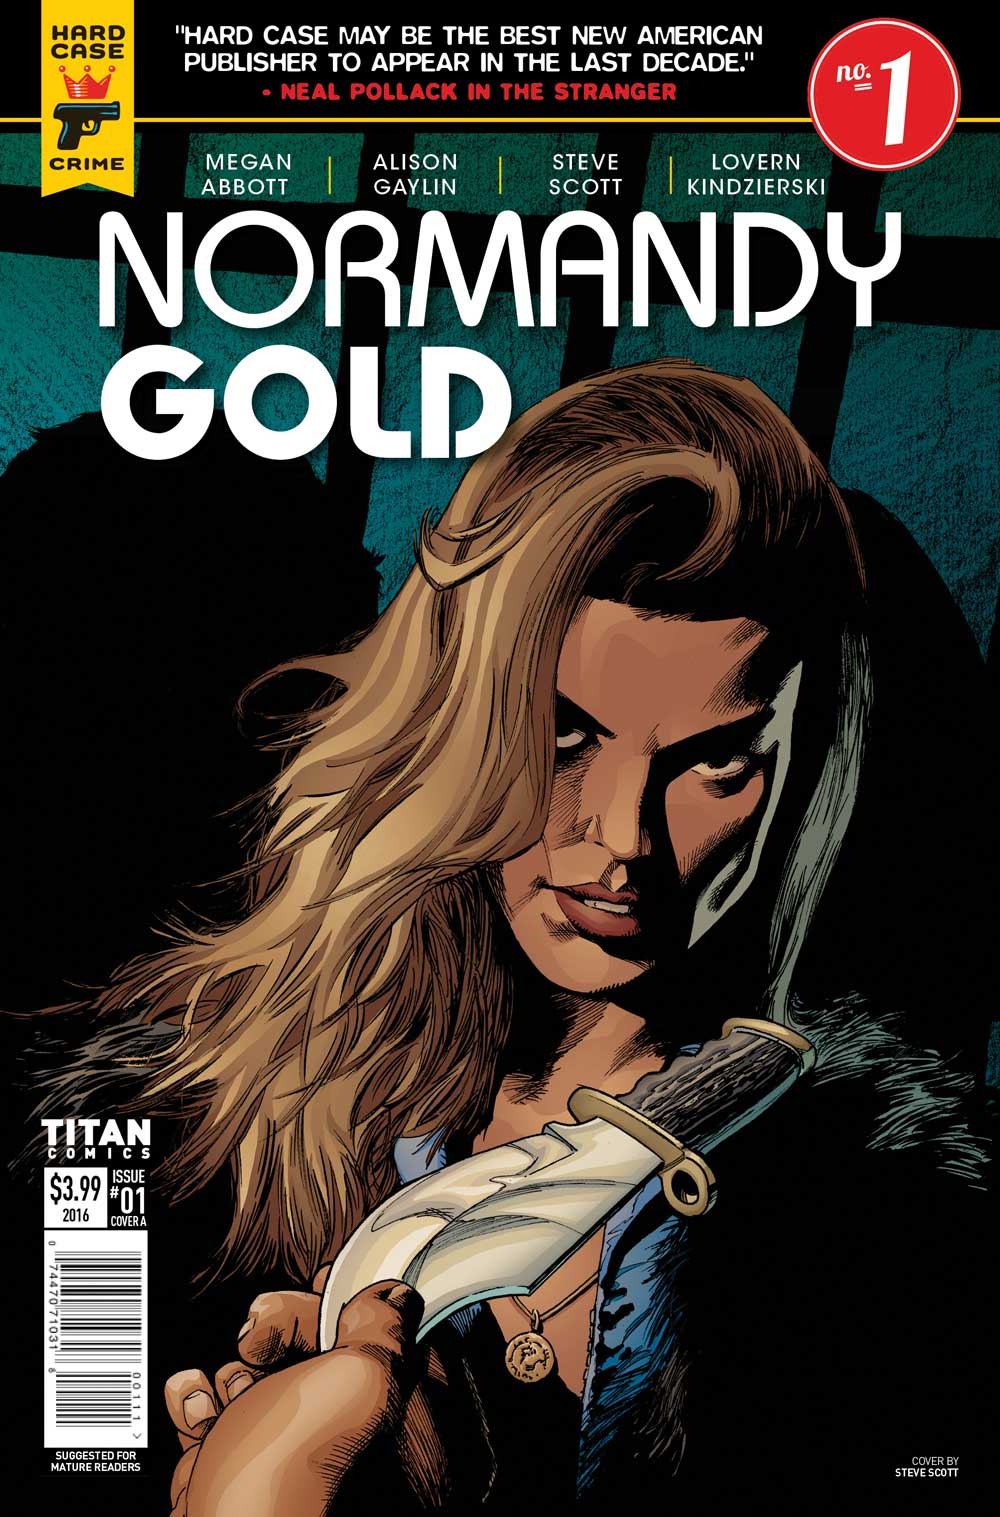 Titan Preview: Normandy Gold #1